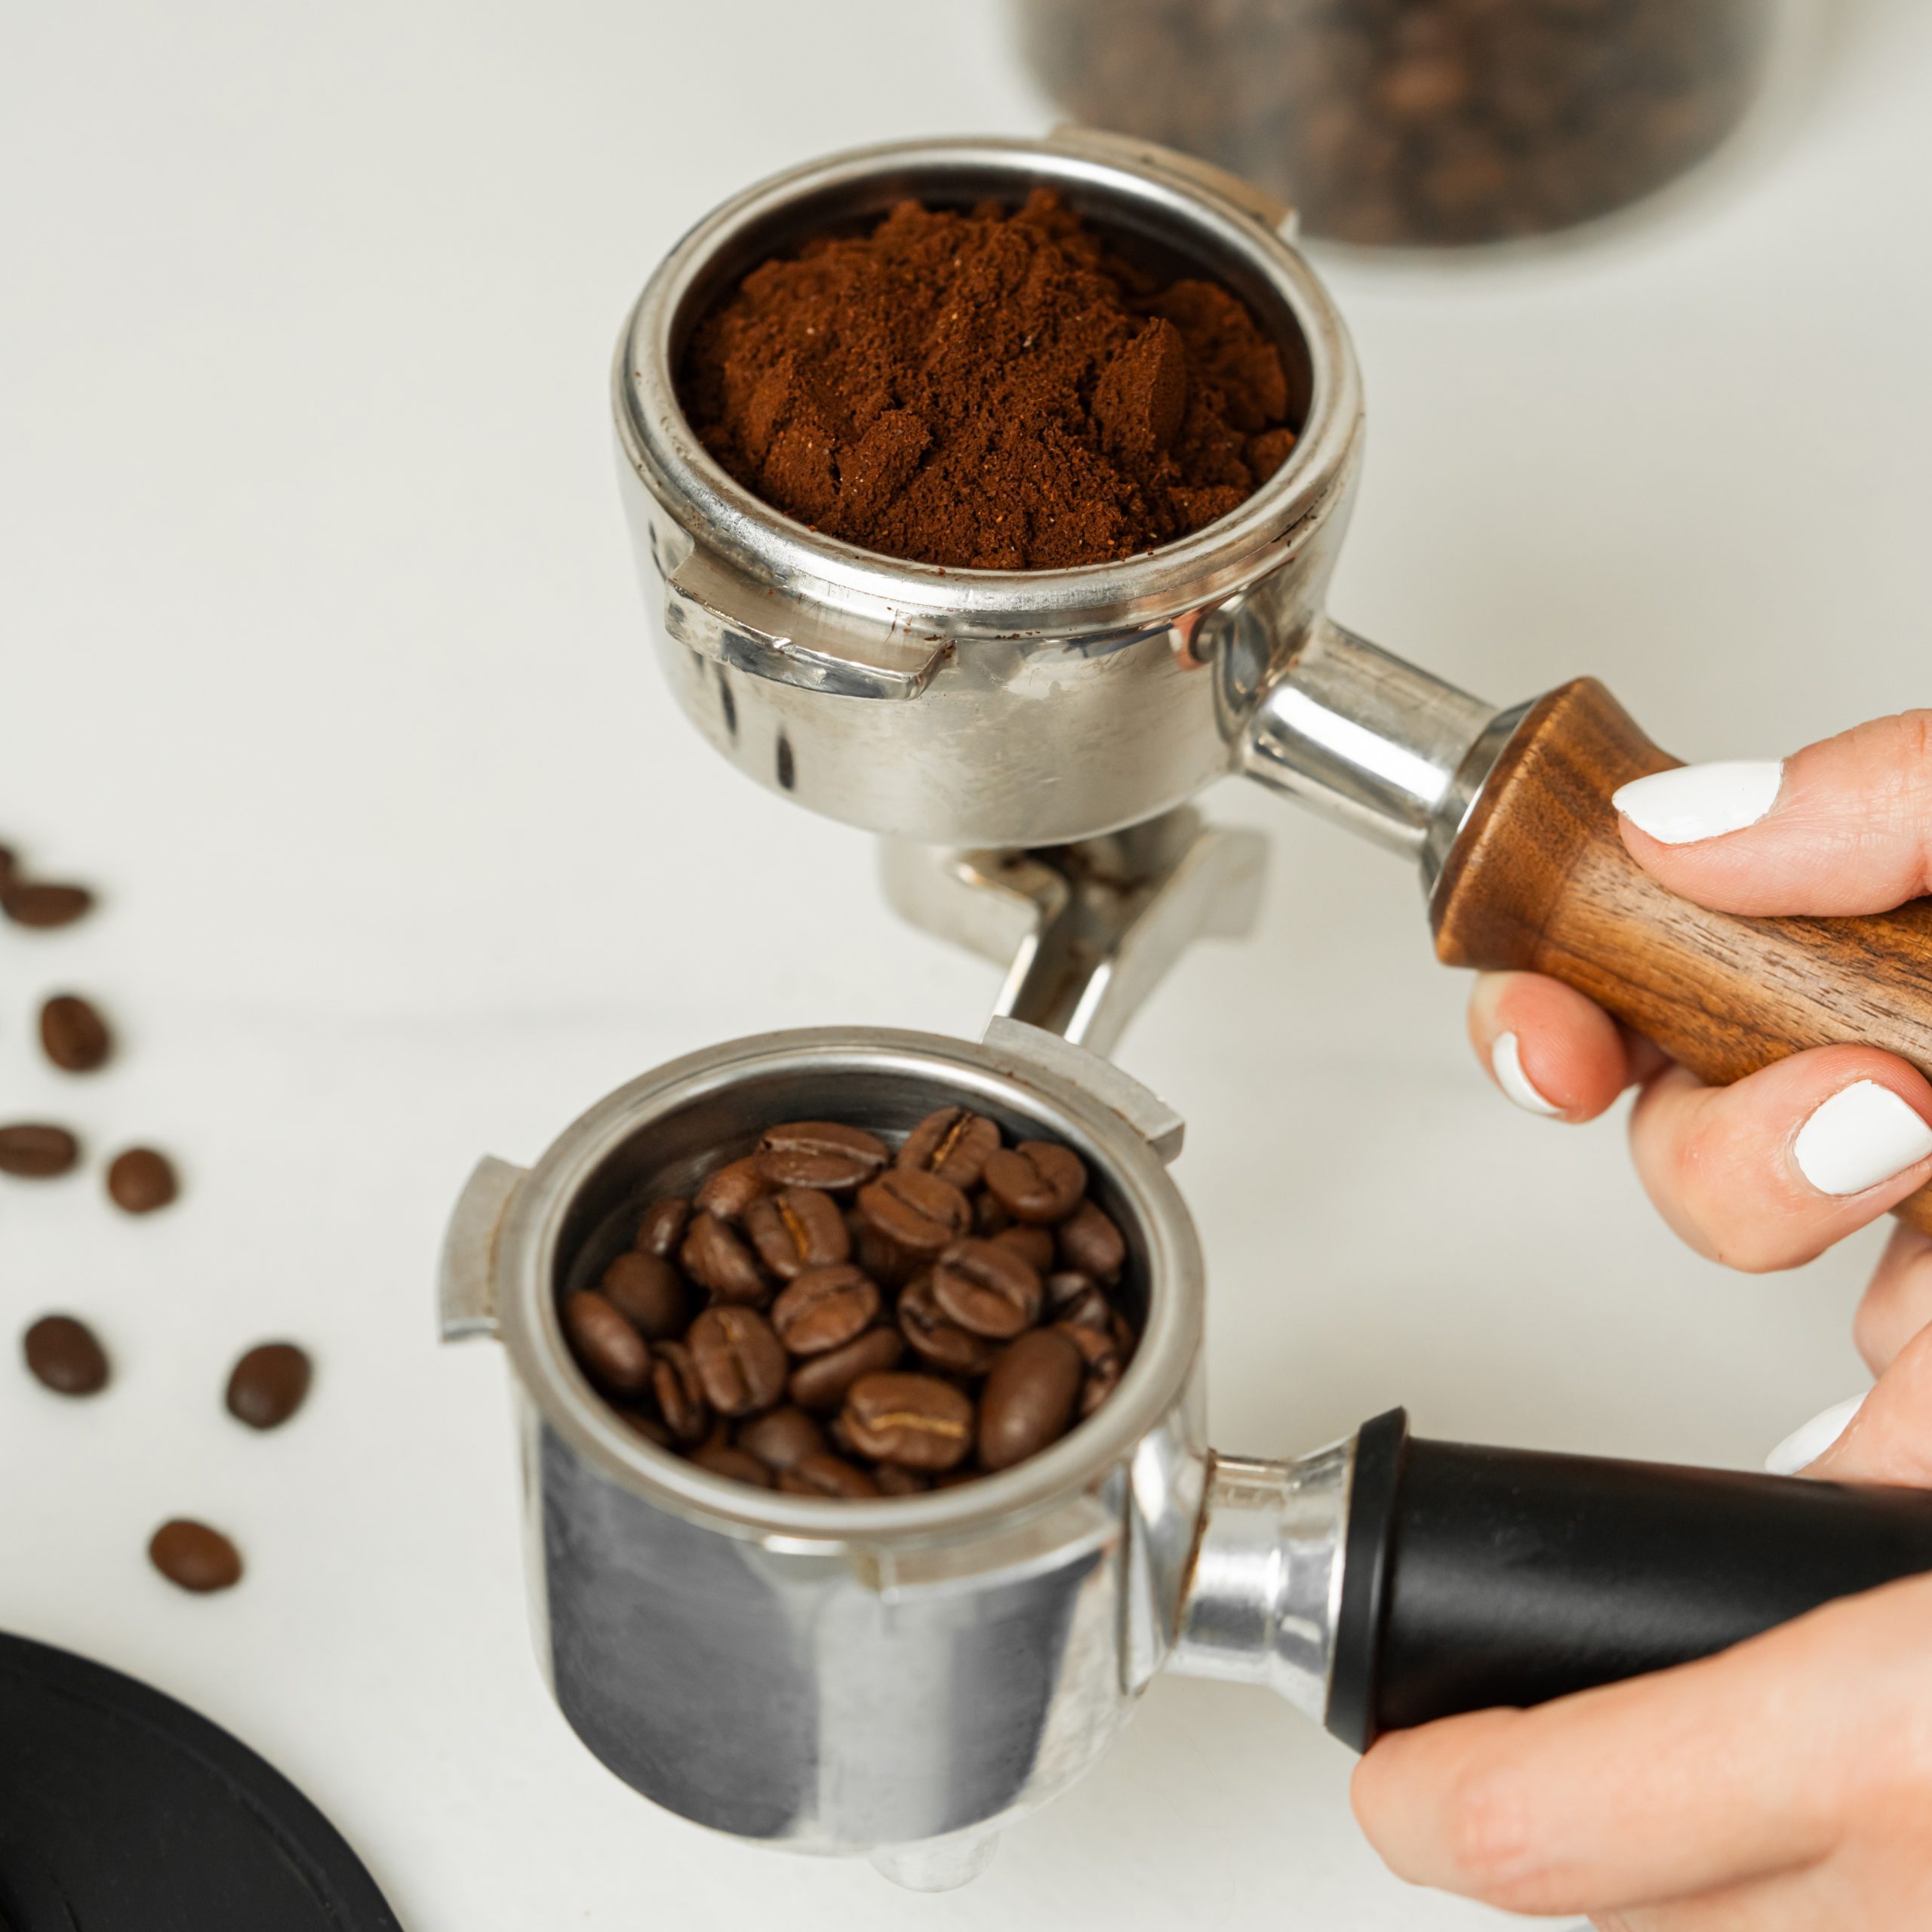 Espresso Special Grain Coffee Intense & Latte 1 KG